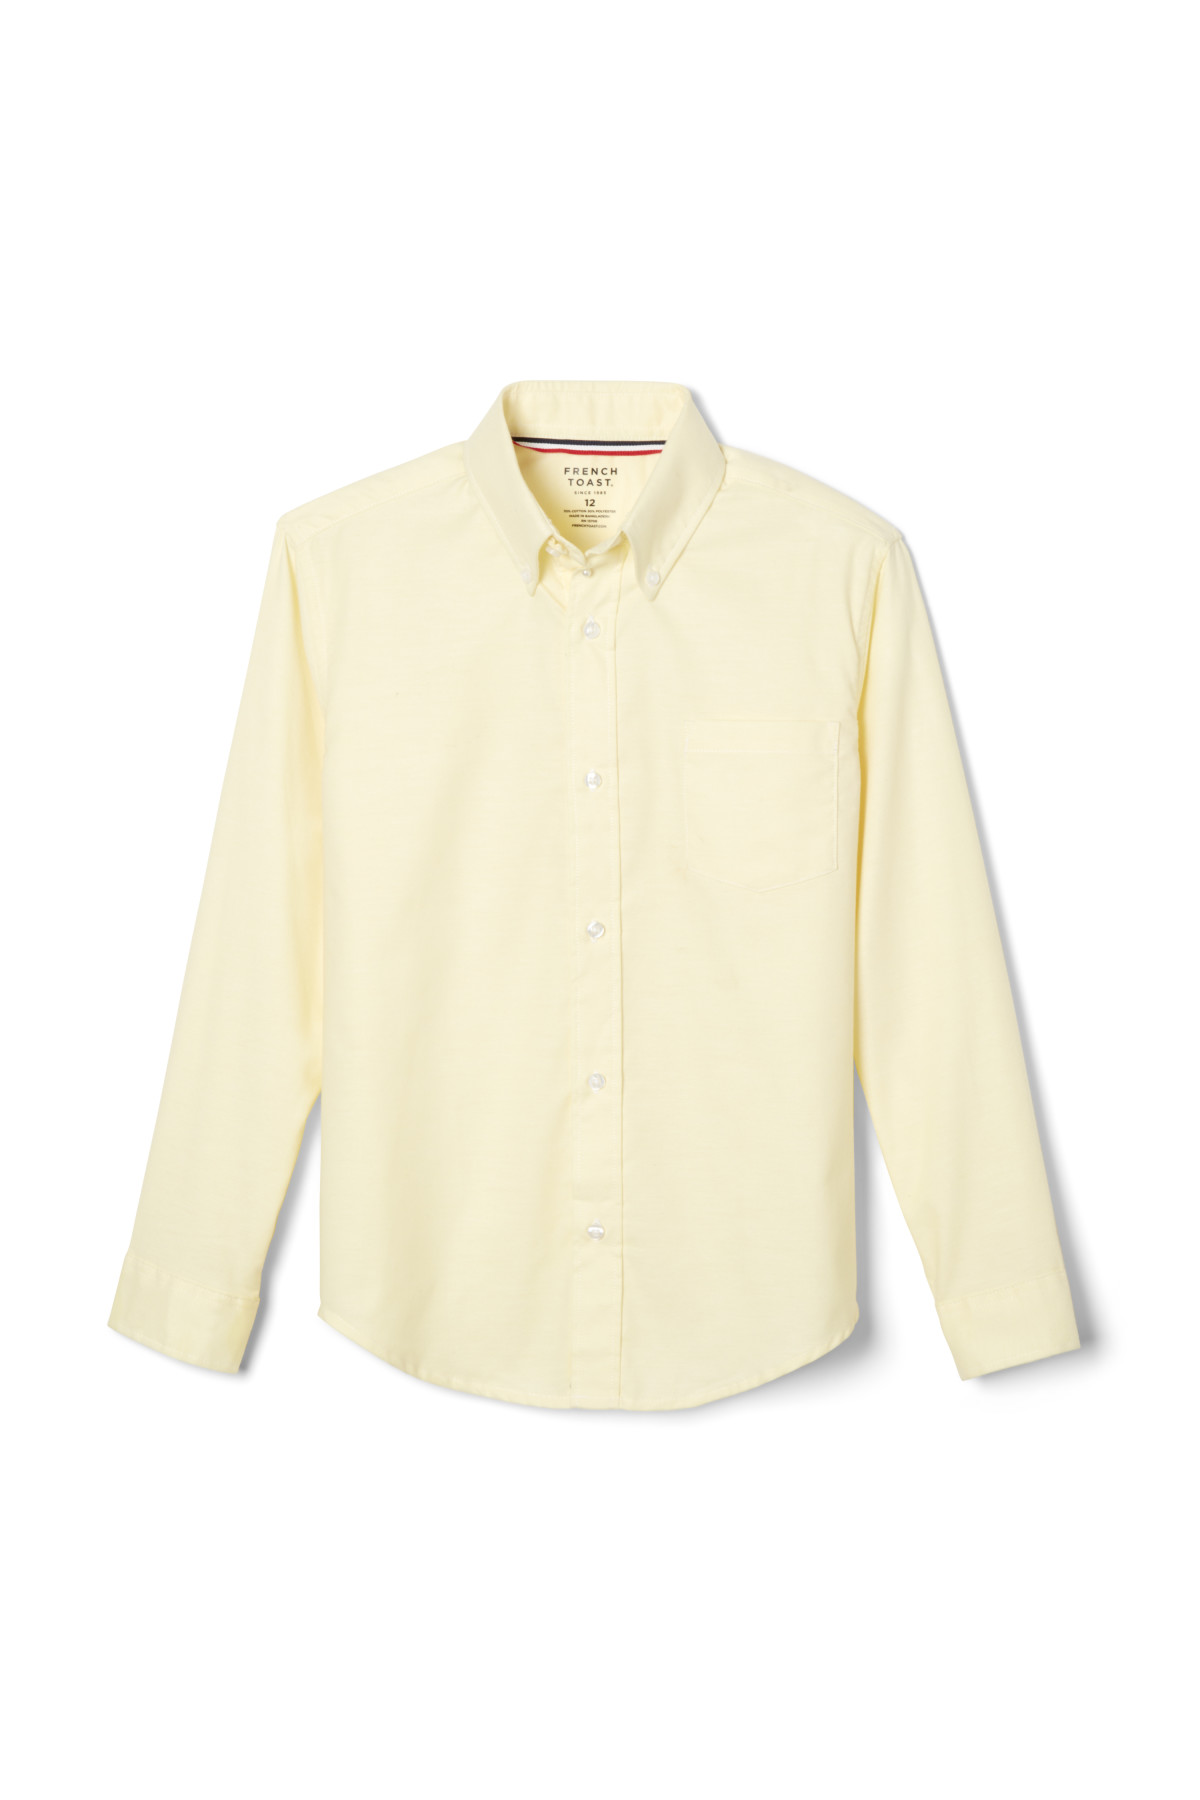 Essentials Boys' Long-Sleeve Uniform Oxford Shirt